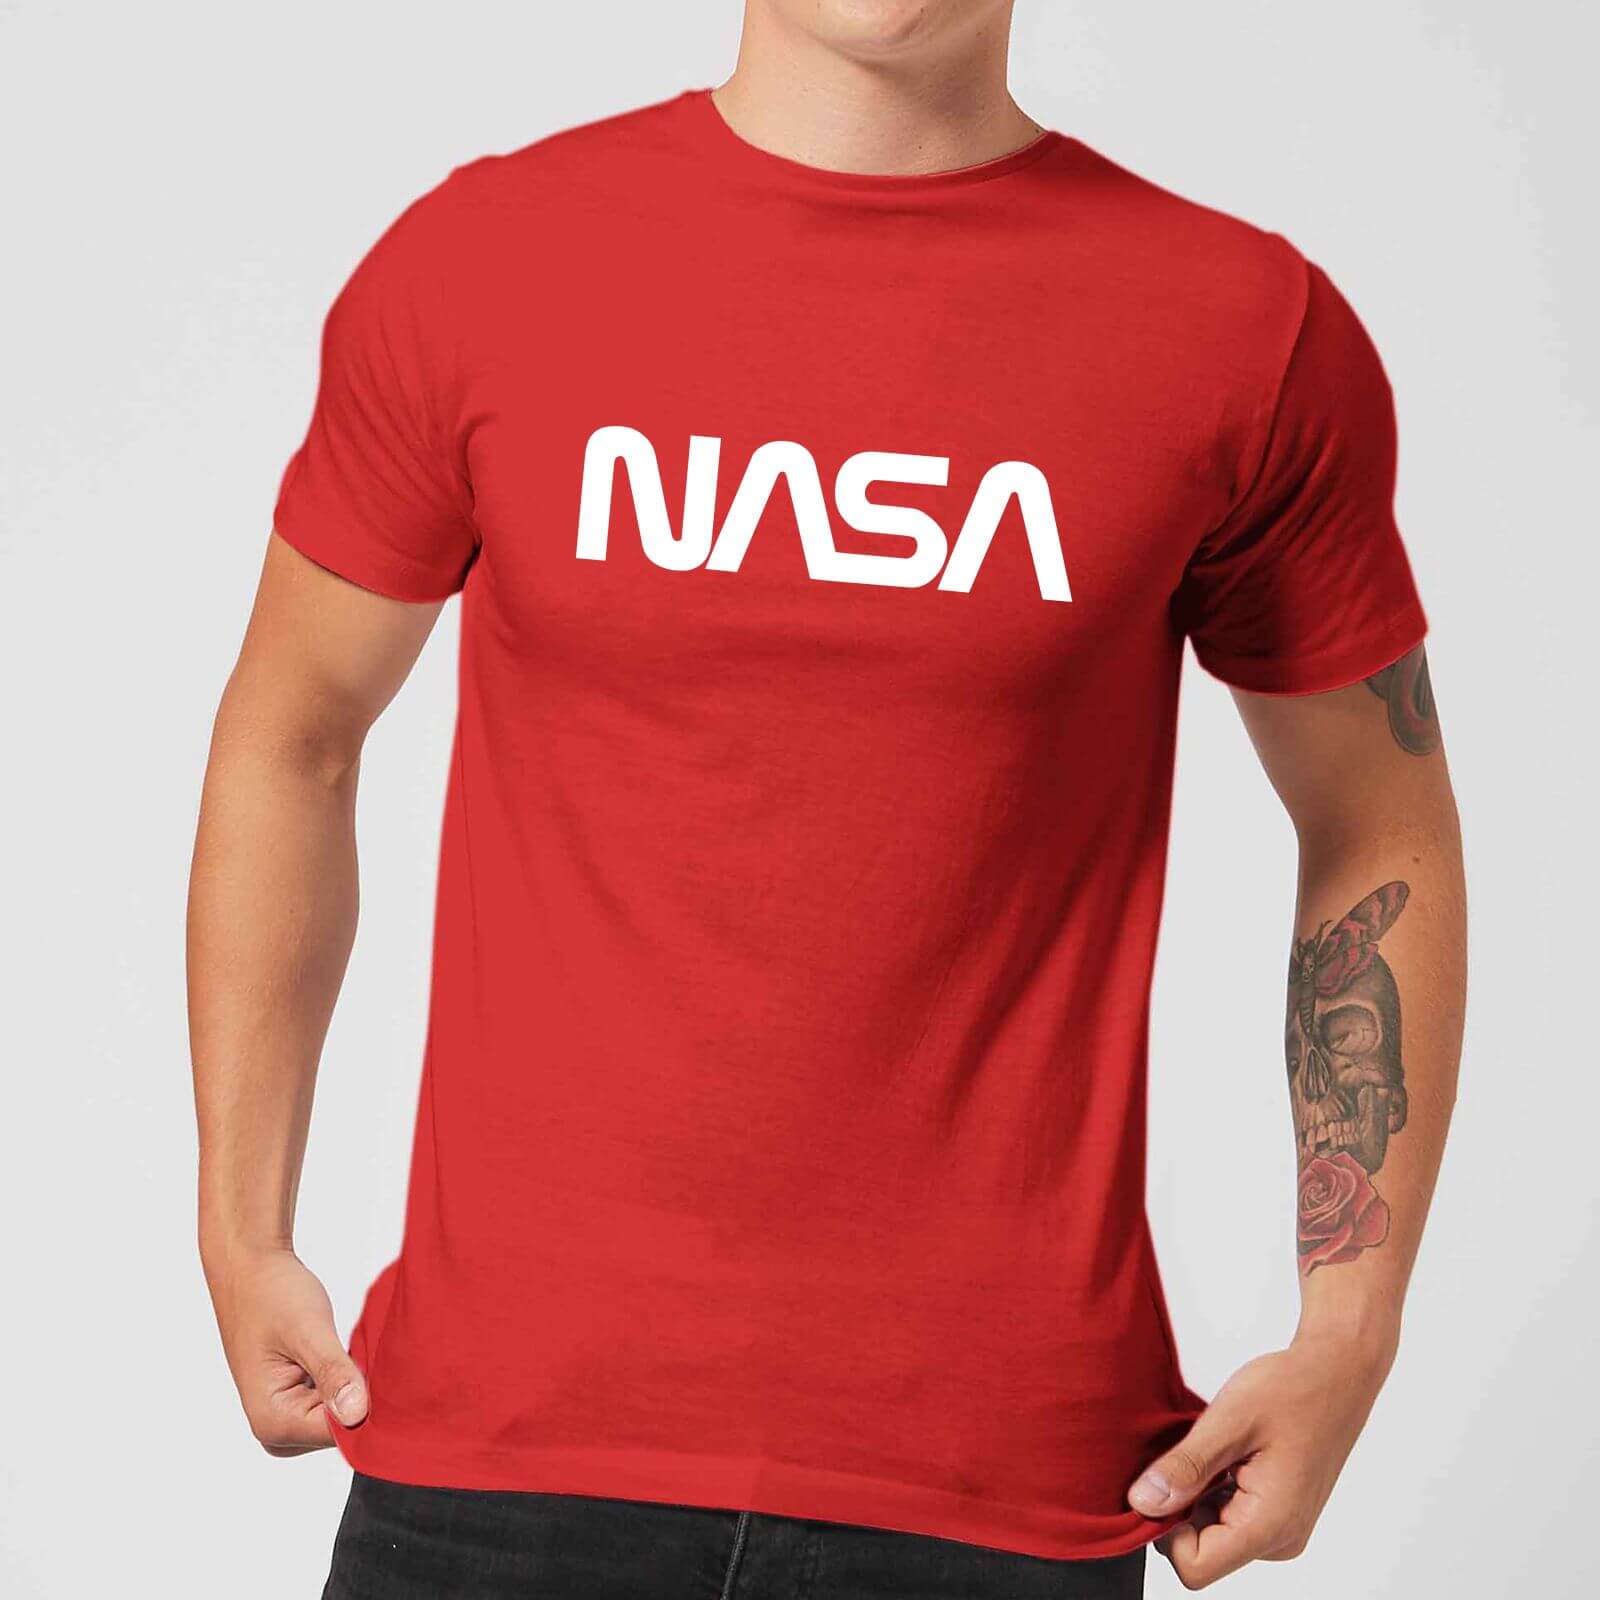 NASA Worm White Logotype T-Shirt - Red - M